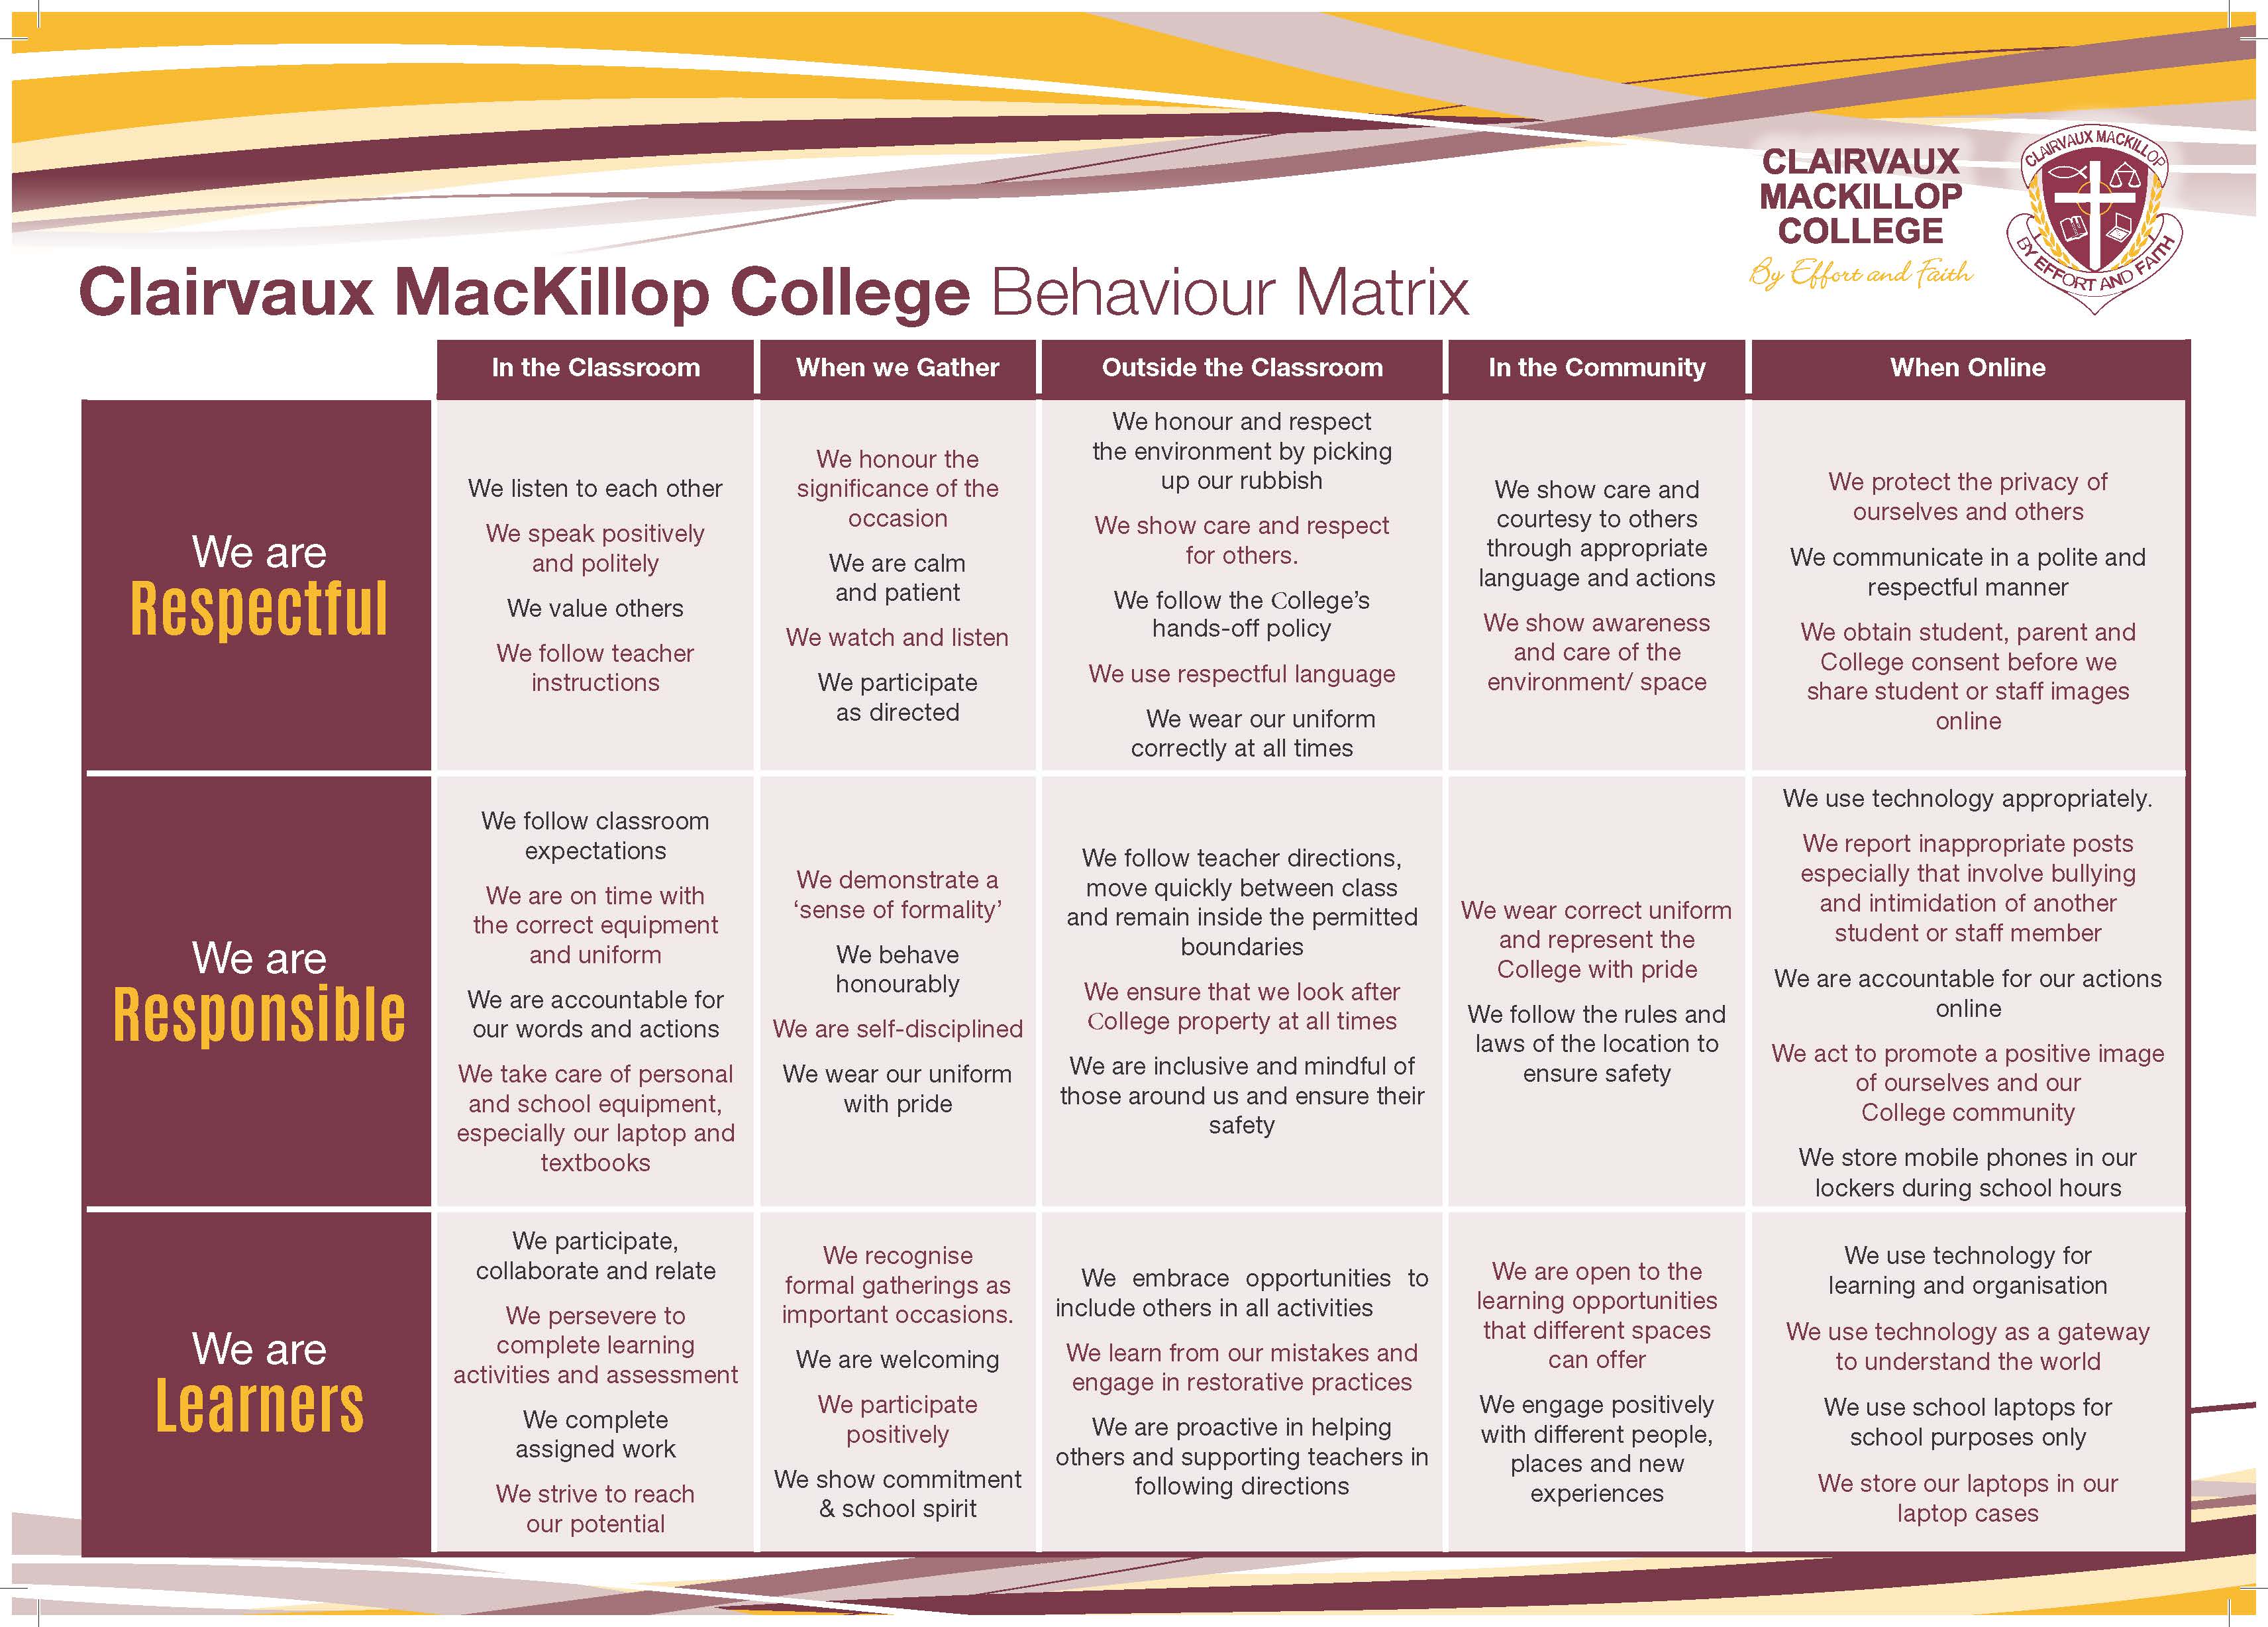 Clairvaux MacKillop College Behaviour Matrix.jpg